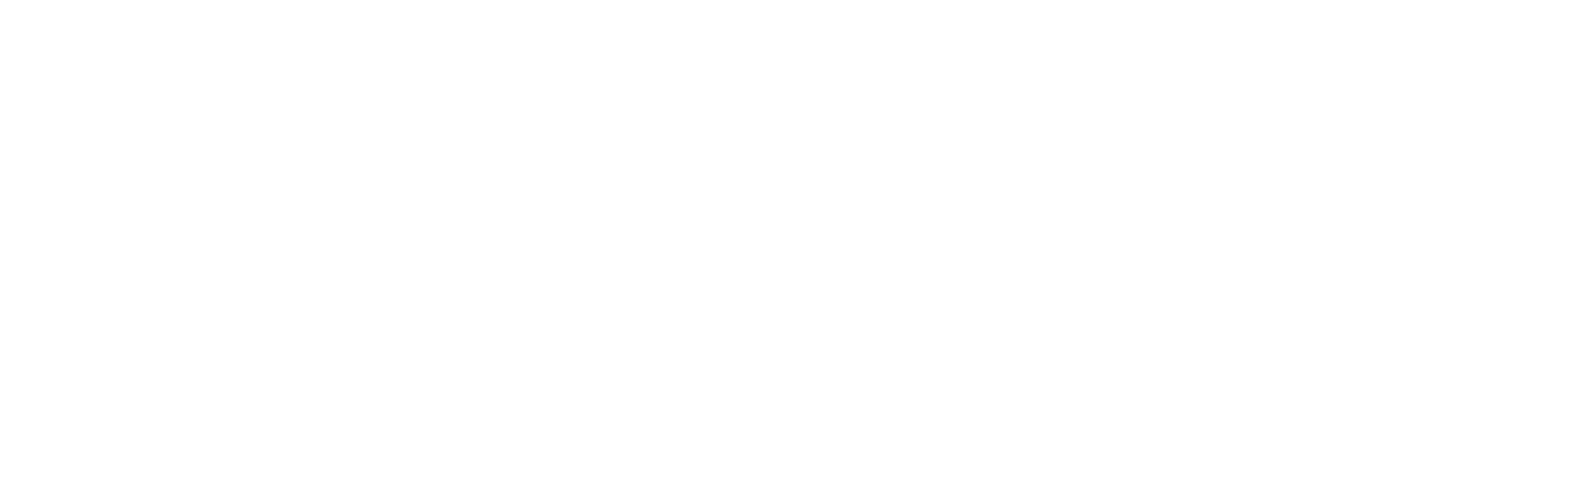 Veritex Holdings
 logo large for dark backgrounds (transparent PNG)